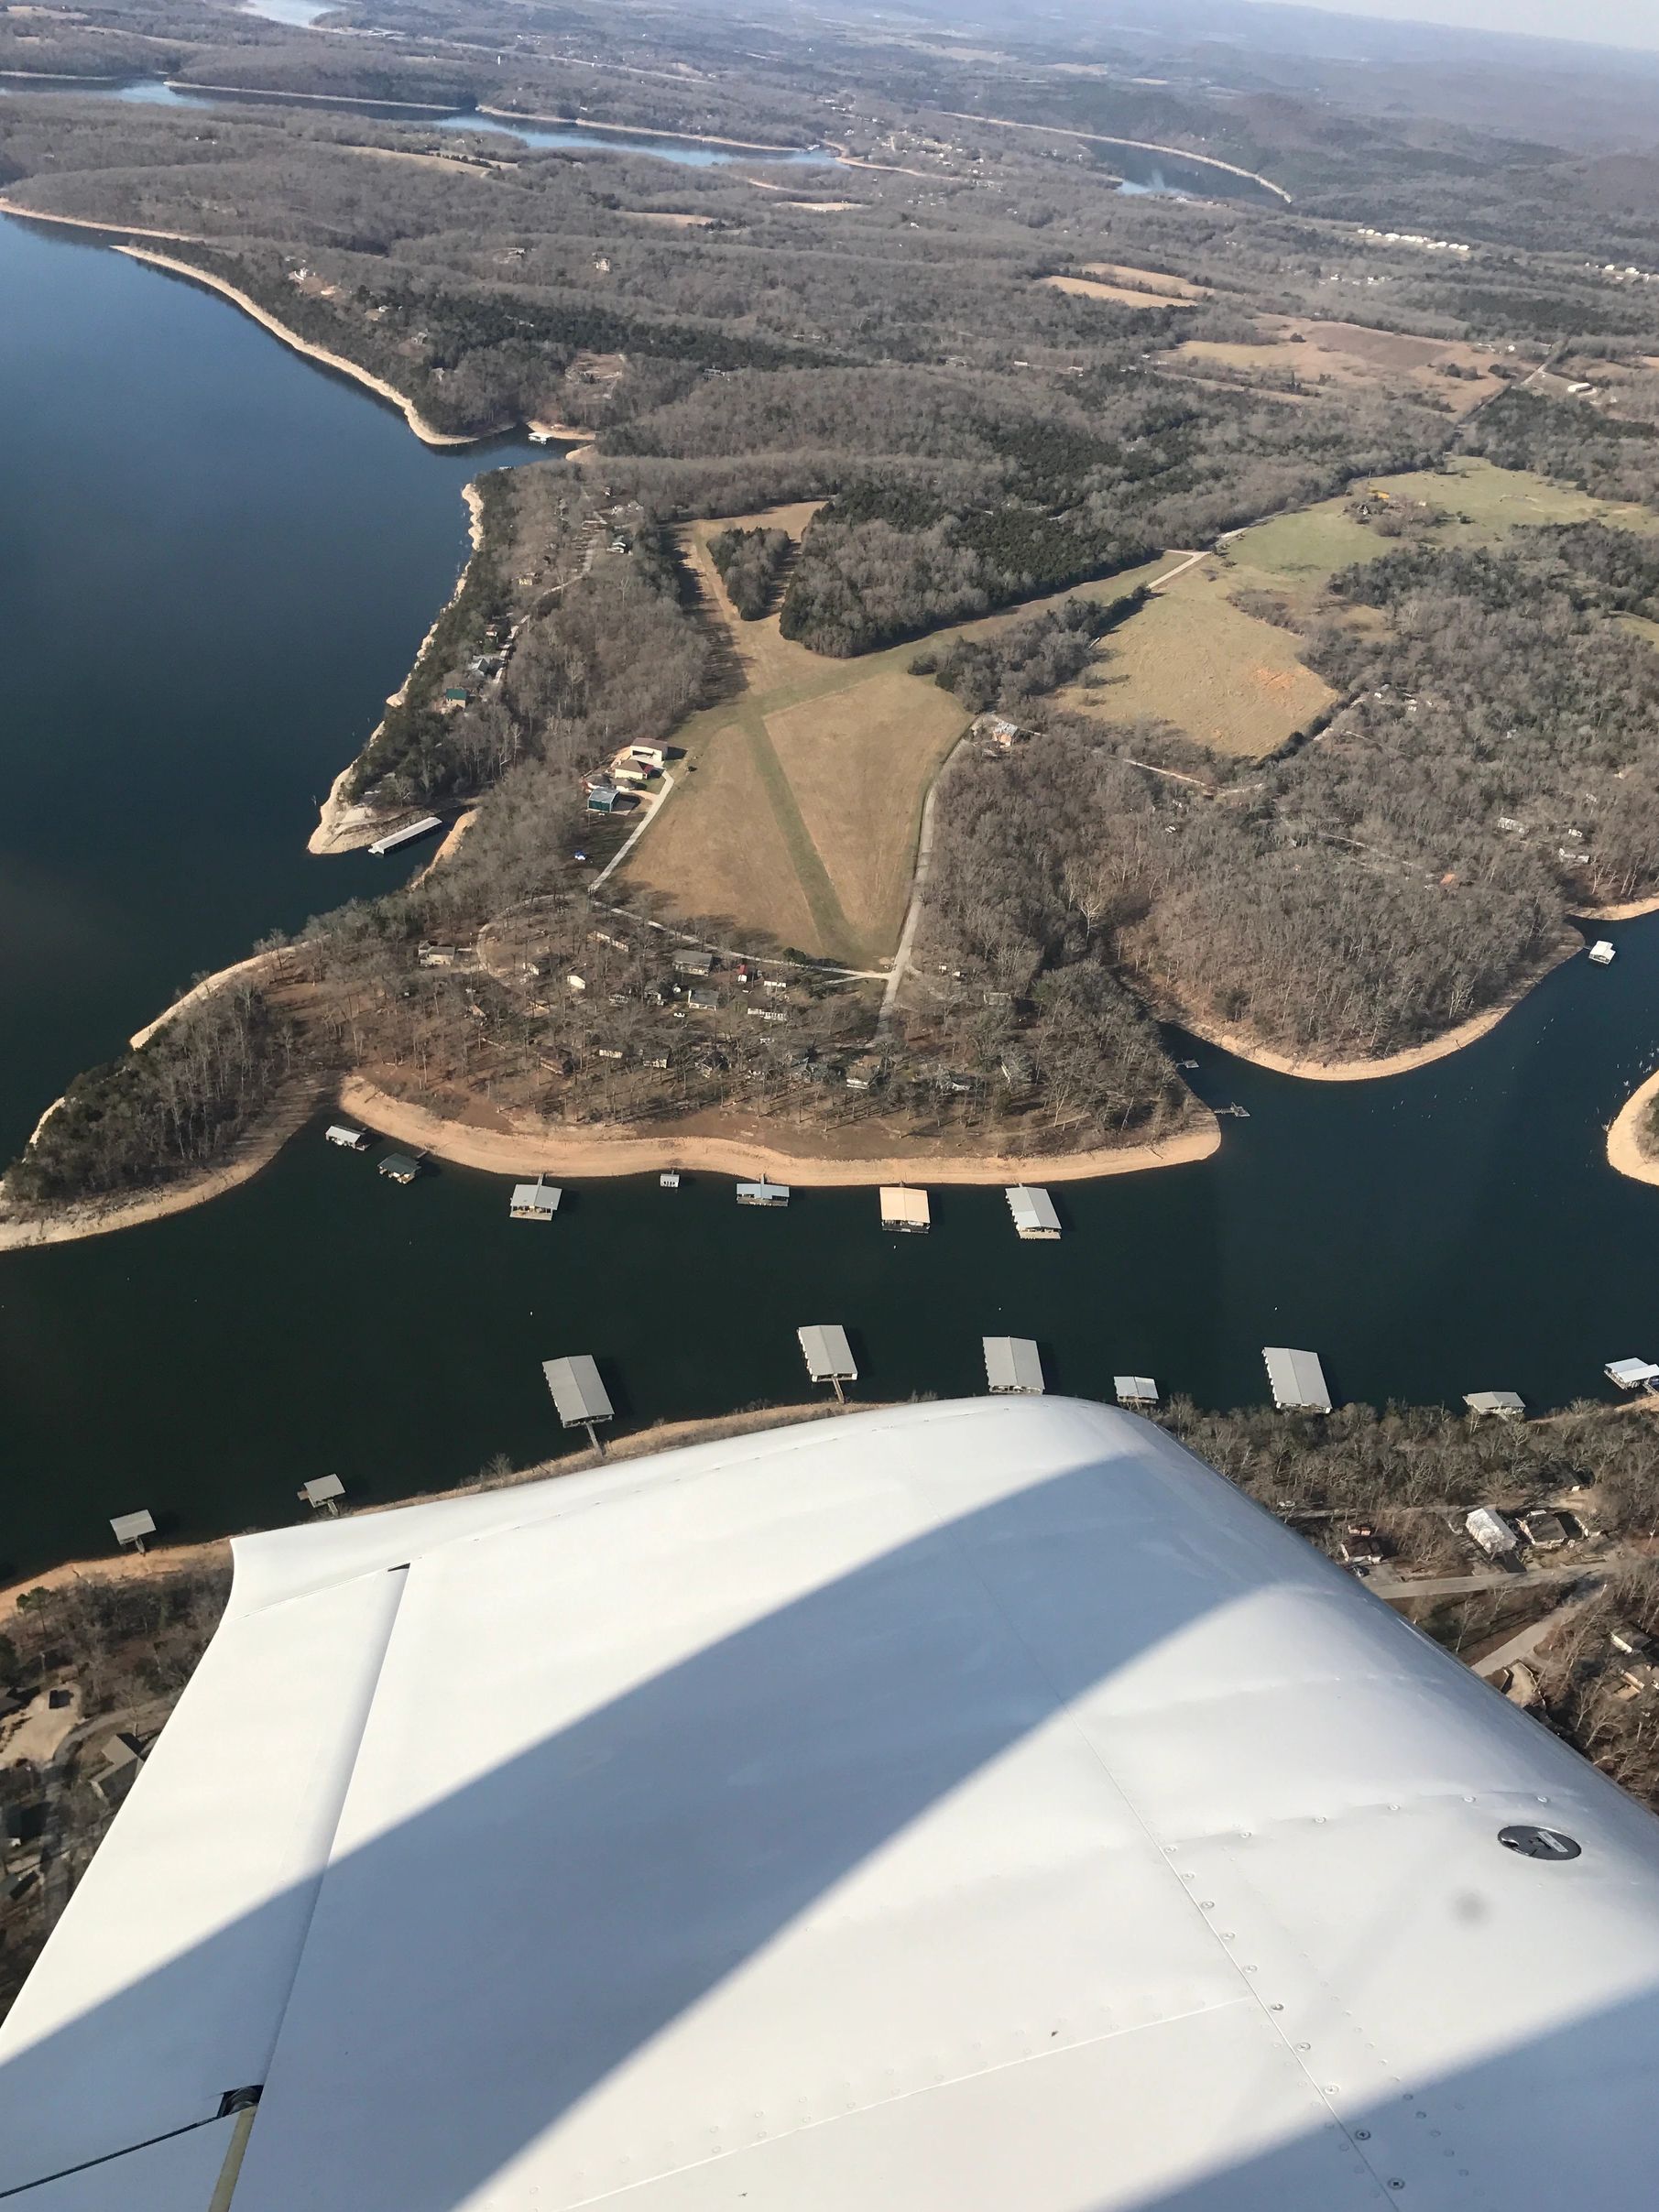 Pilot's Point, Runways, Turf, Airplane, Airpark, Missouri, Ozarks, Table Rock Lake